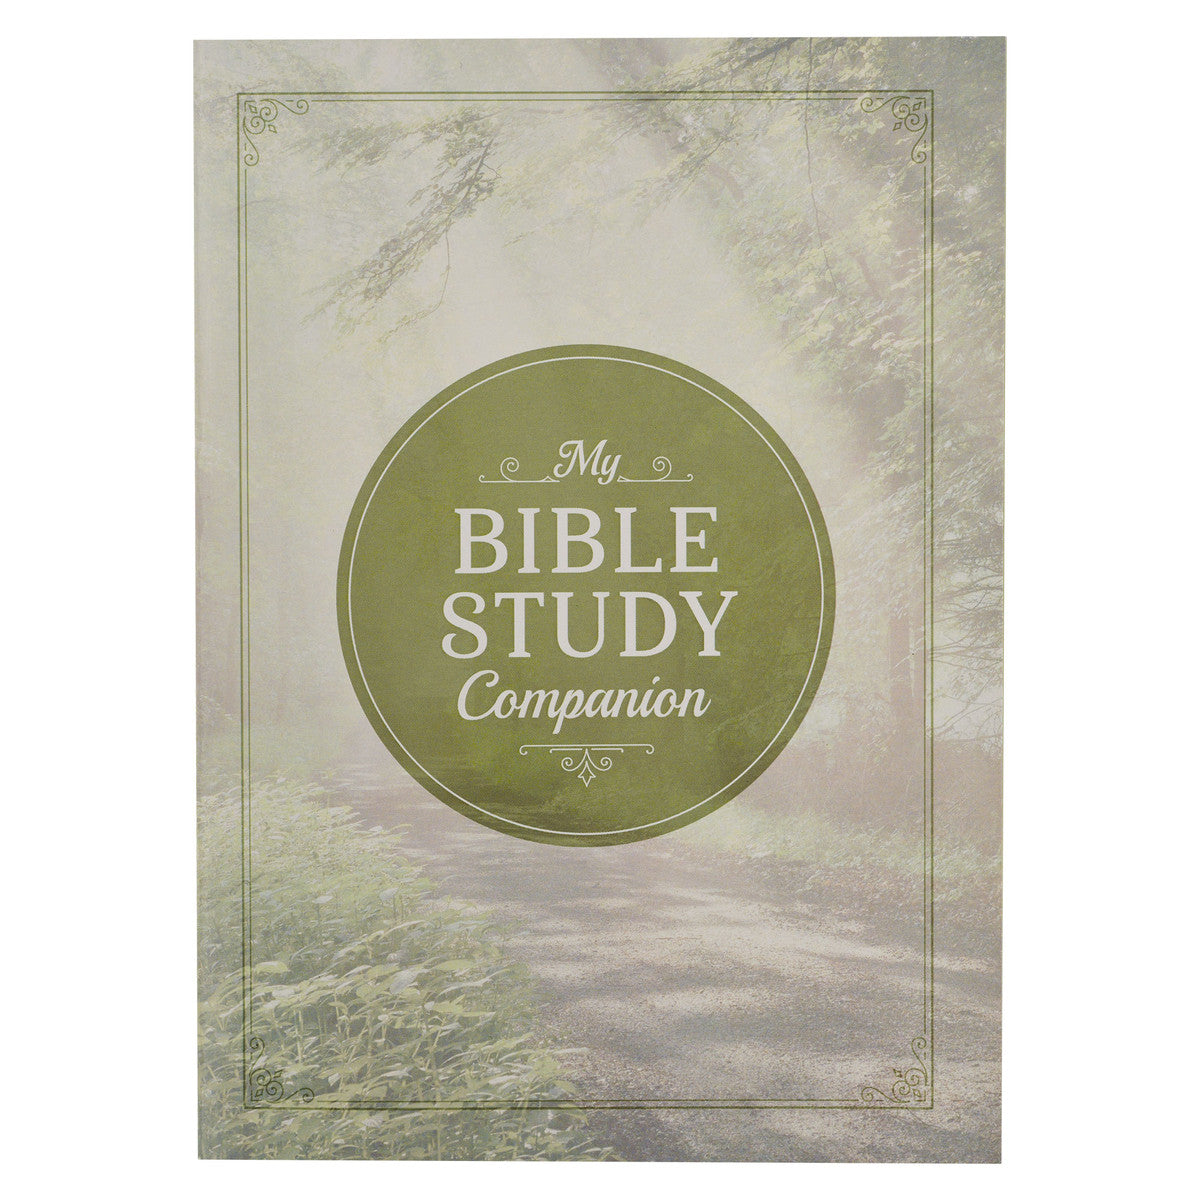 My Bible Study Companion Notebook.